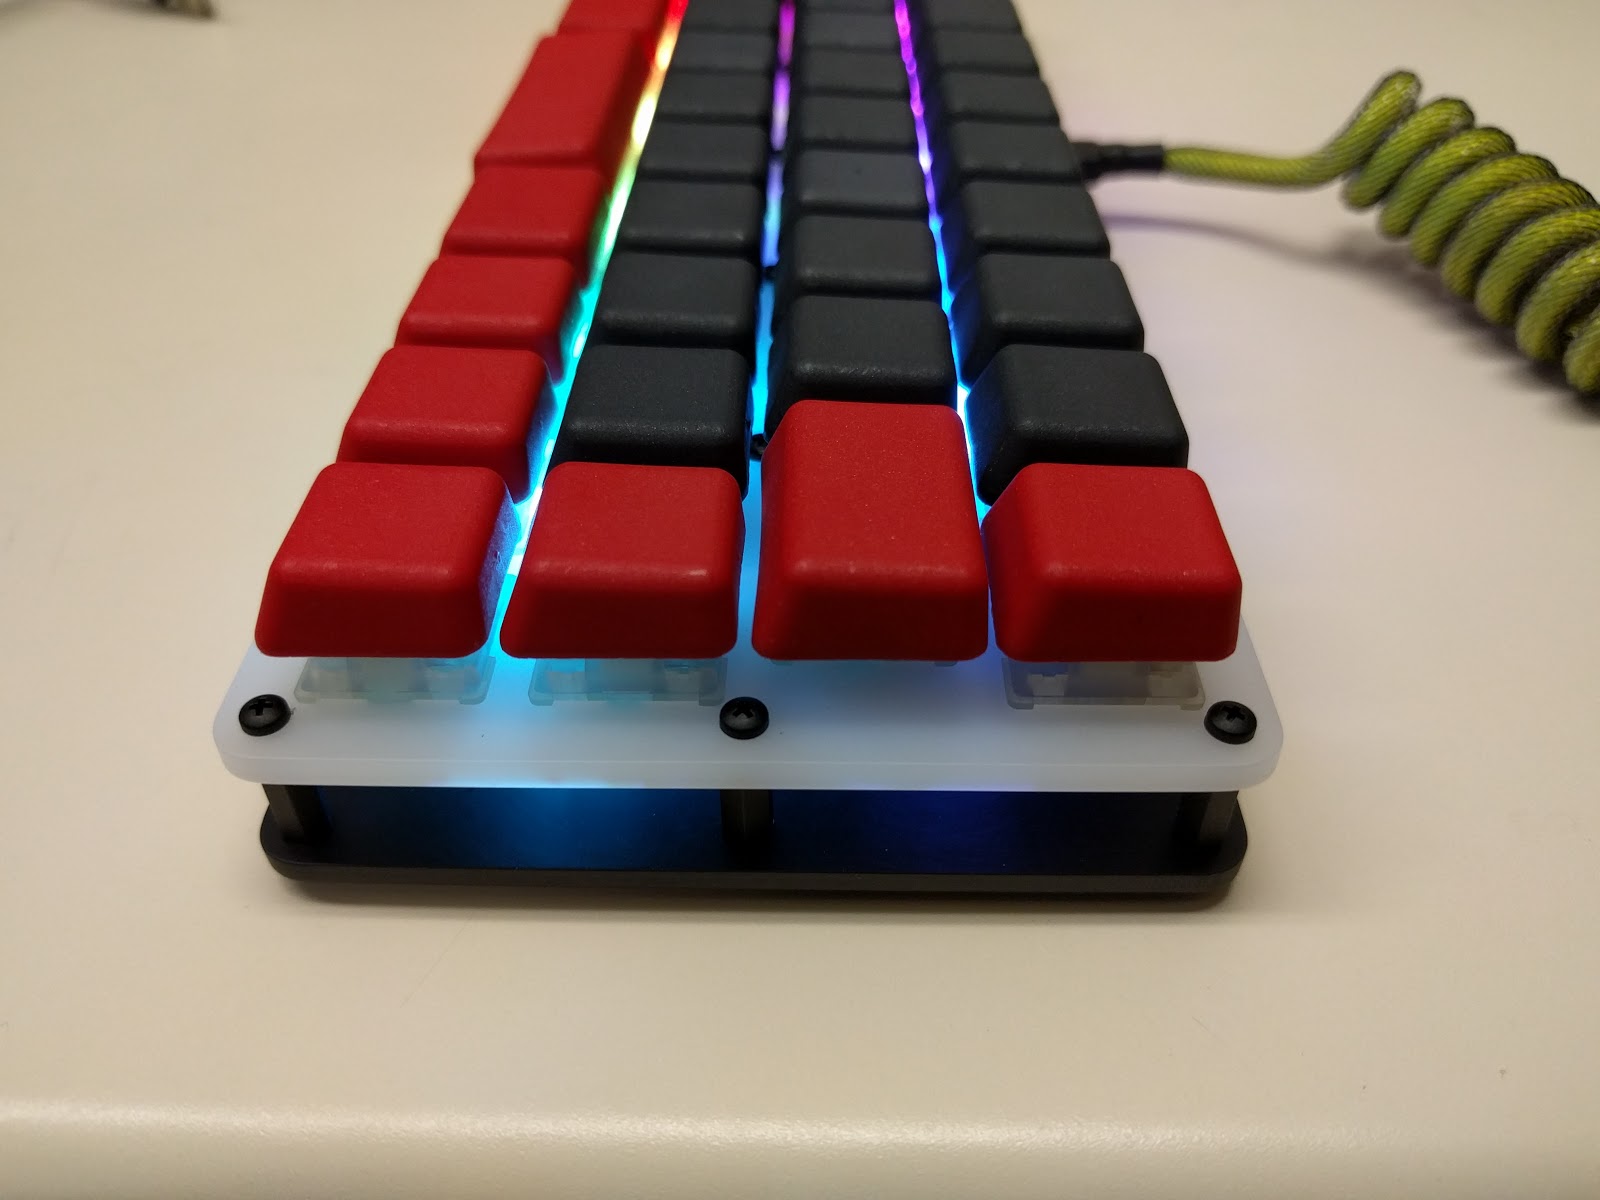 Acrylic Quark with G20 Keycaps.